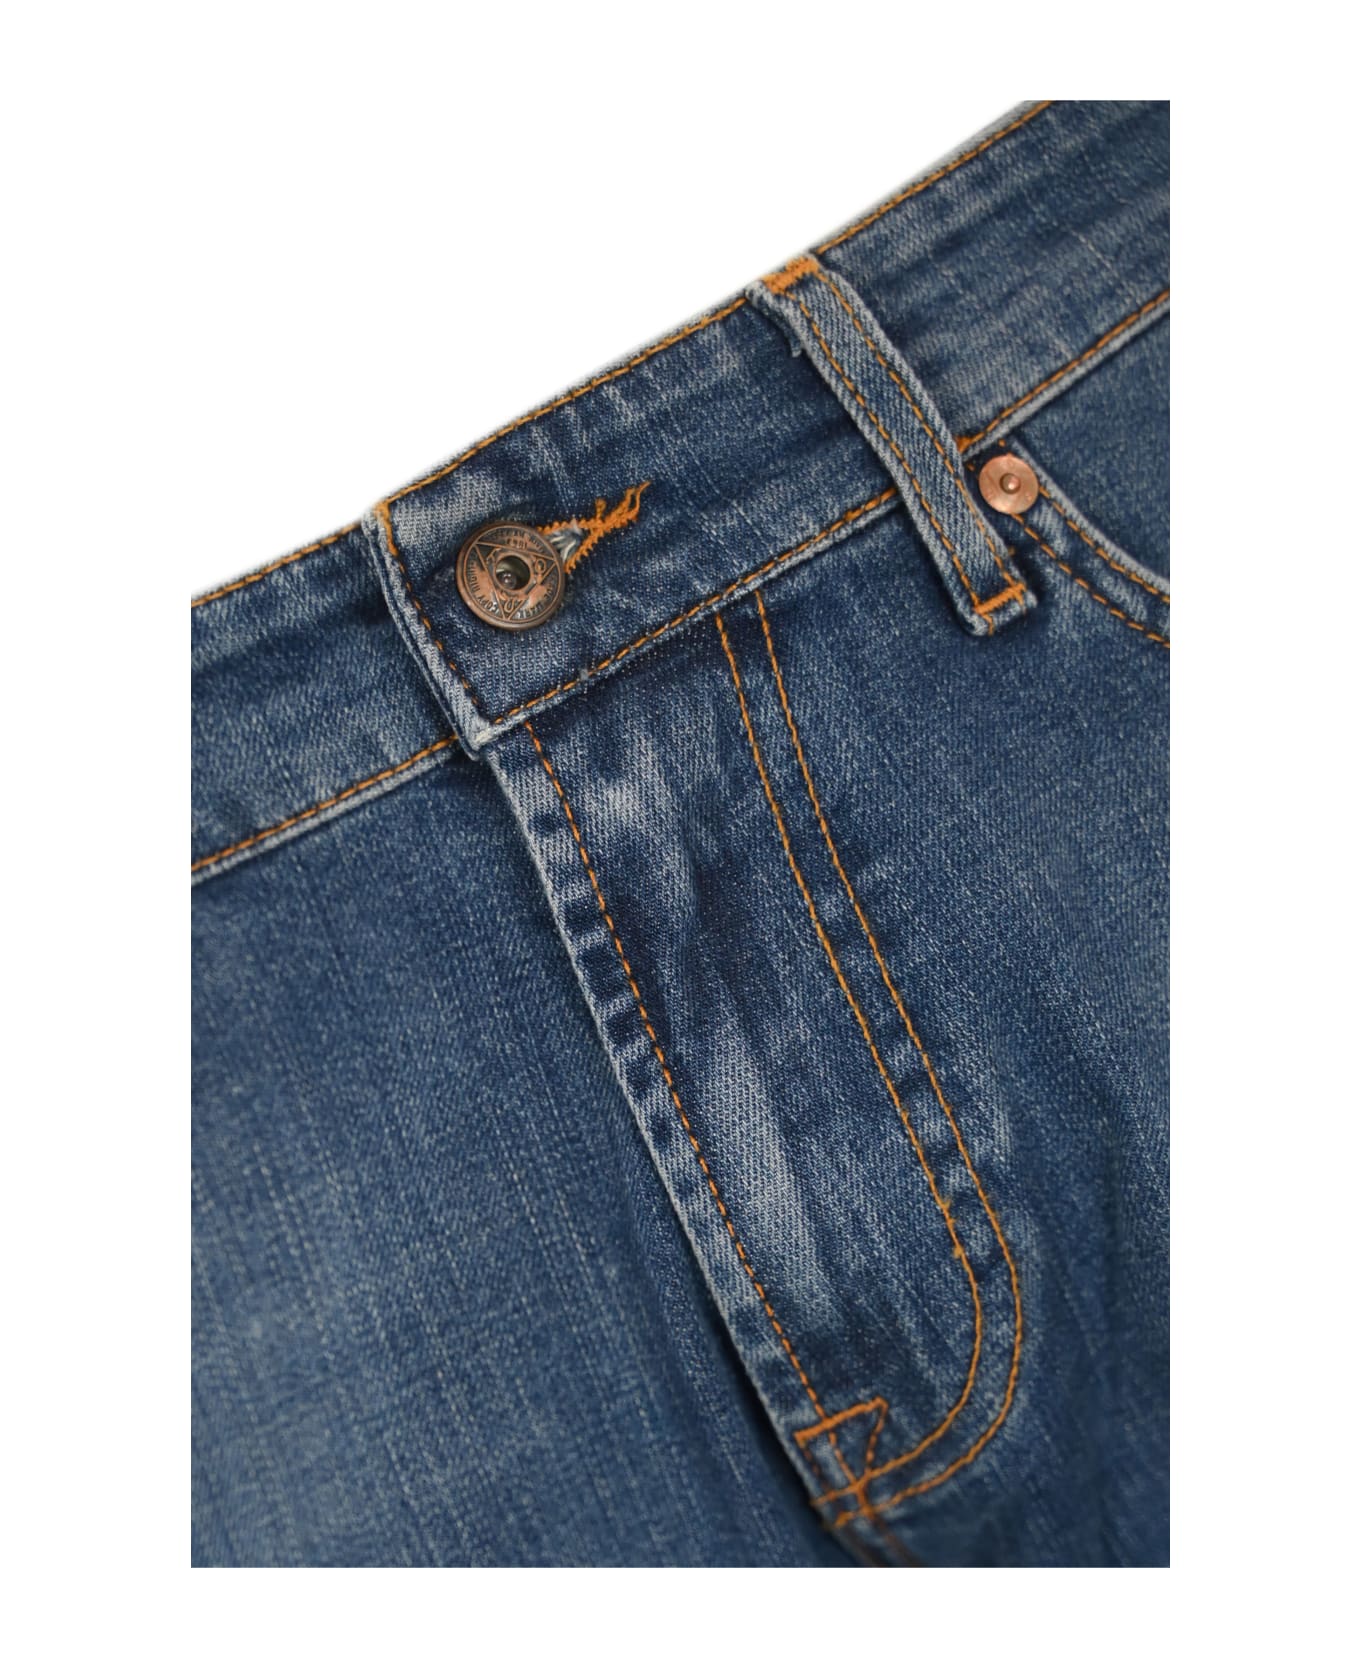 Roy Rogers 527 Denim Jeans - Denim ボトムス